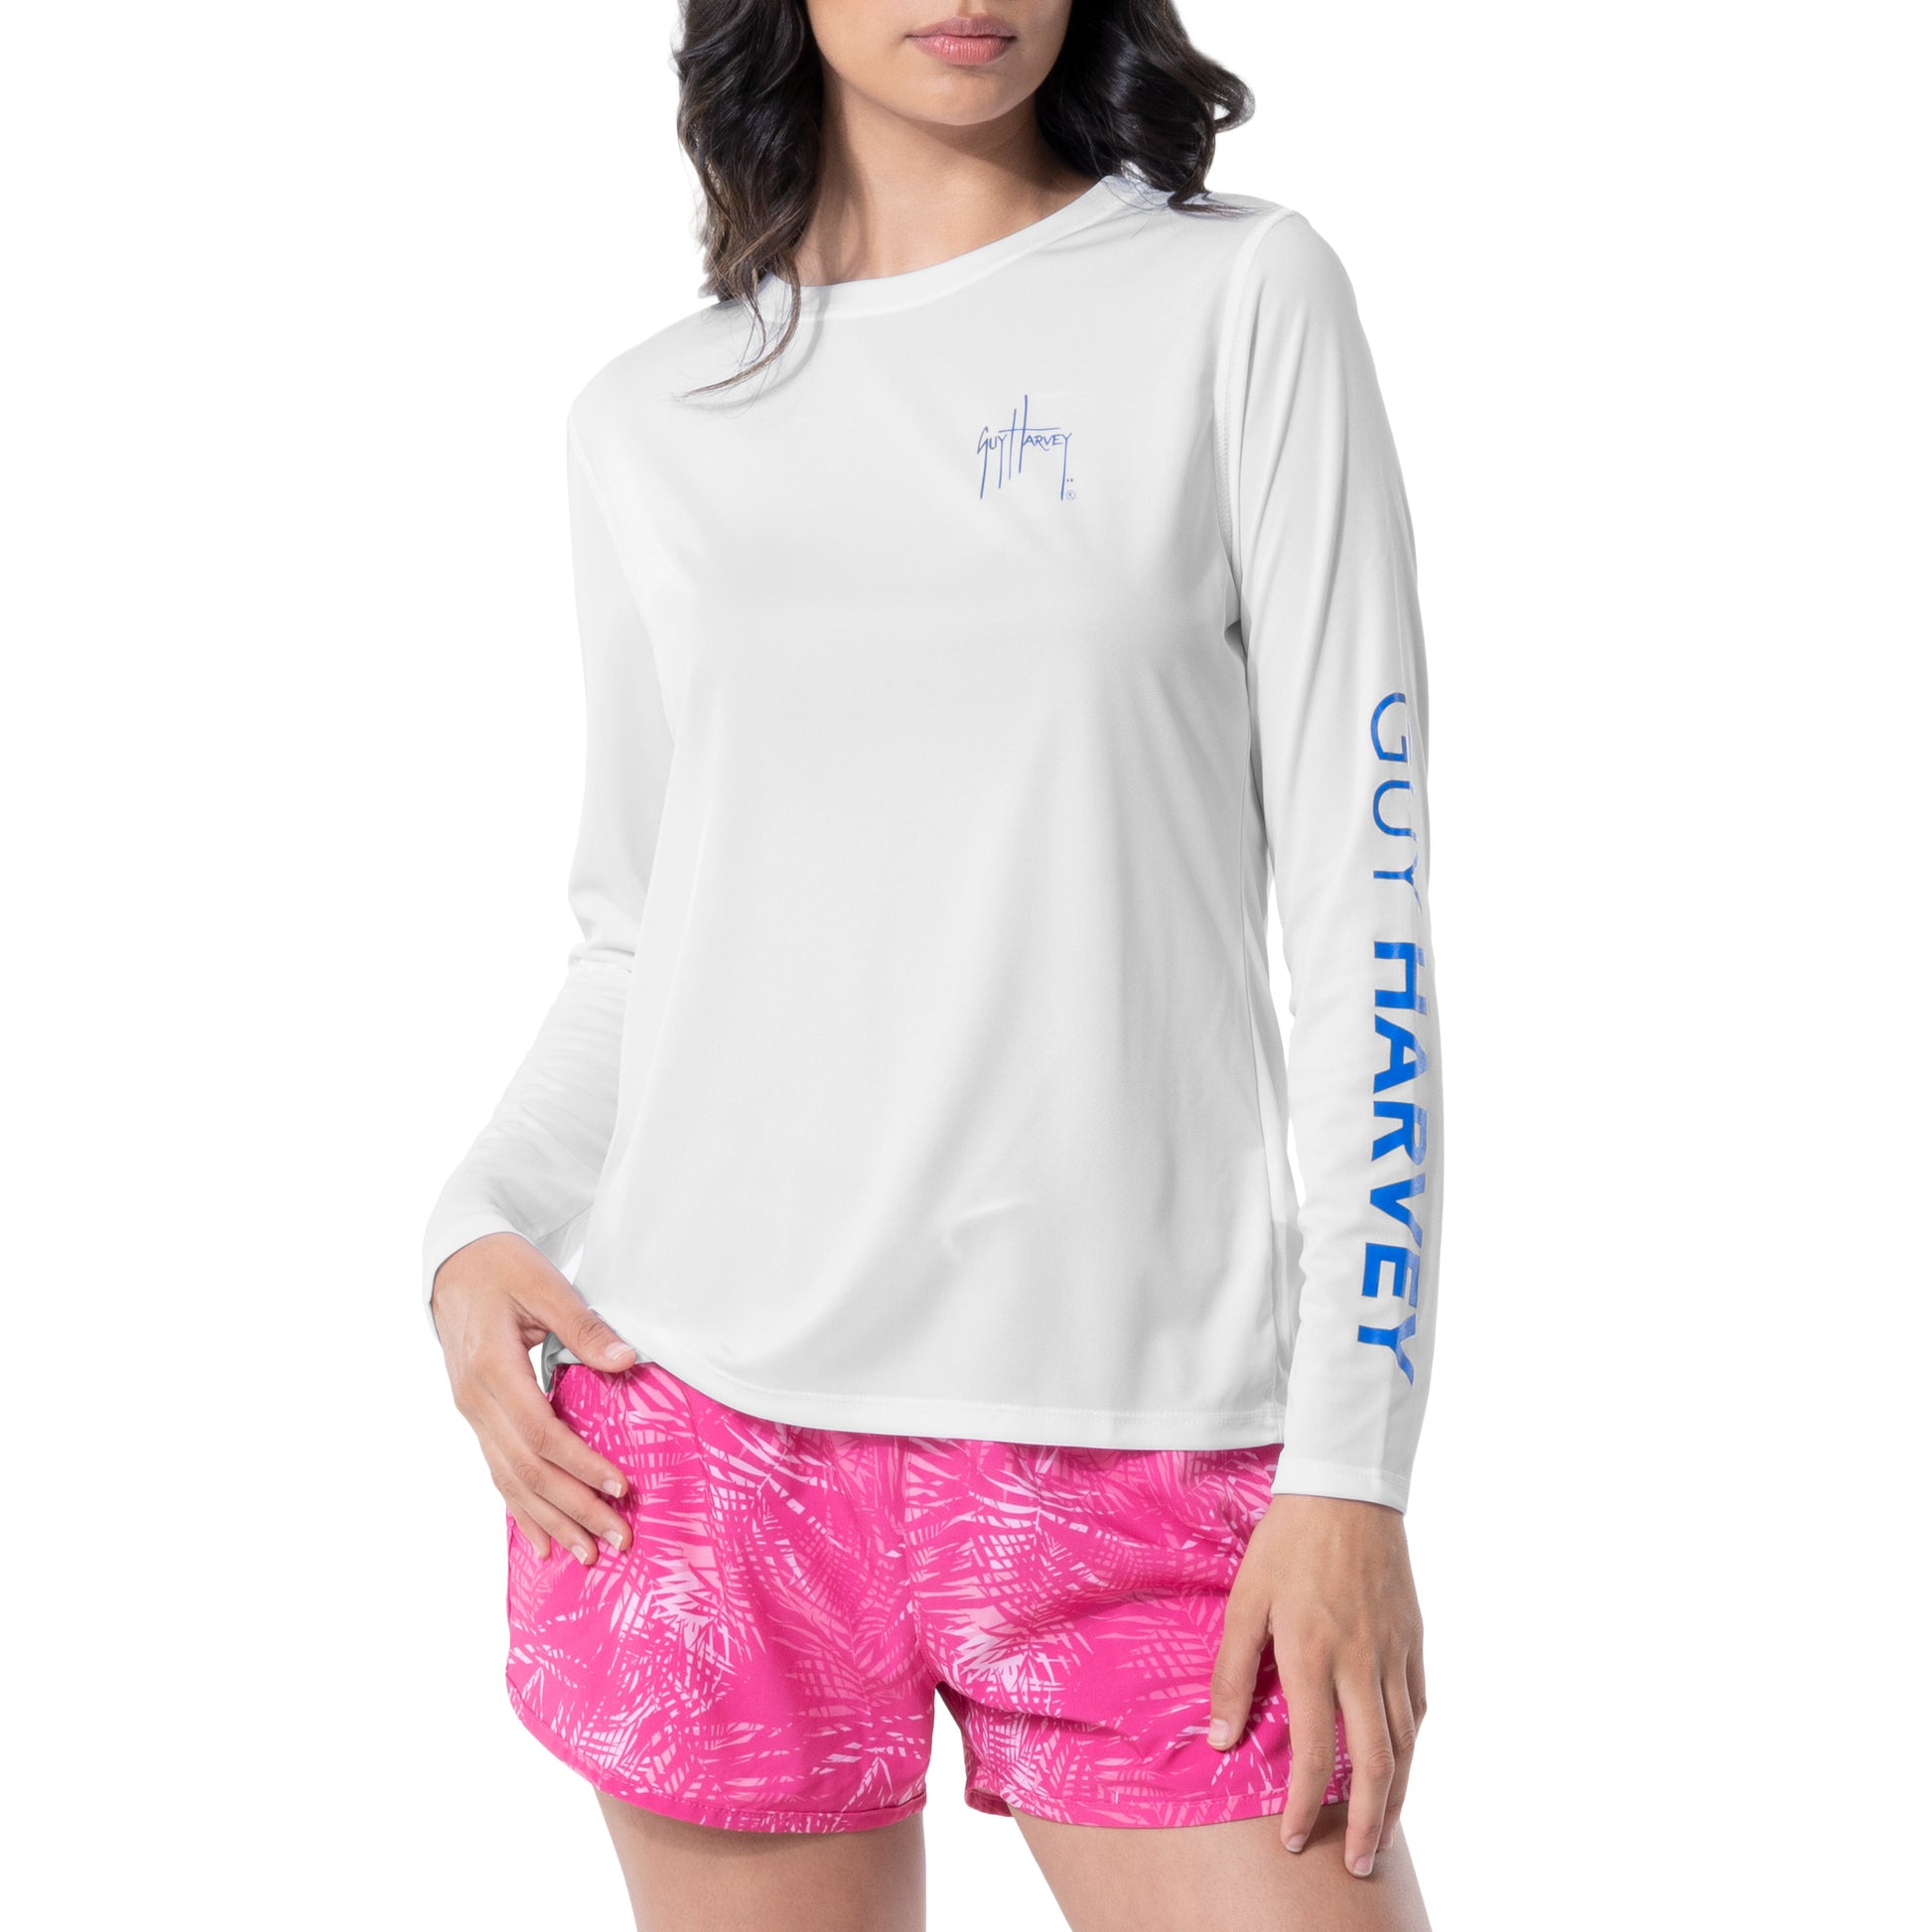 Women’s UPF 50+ Long Sleeve Fishing Shirts FS21W, Peach Amber / 2X-Large